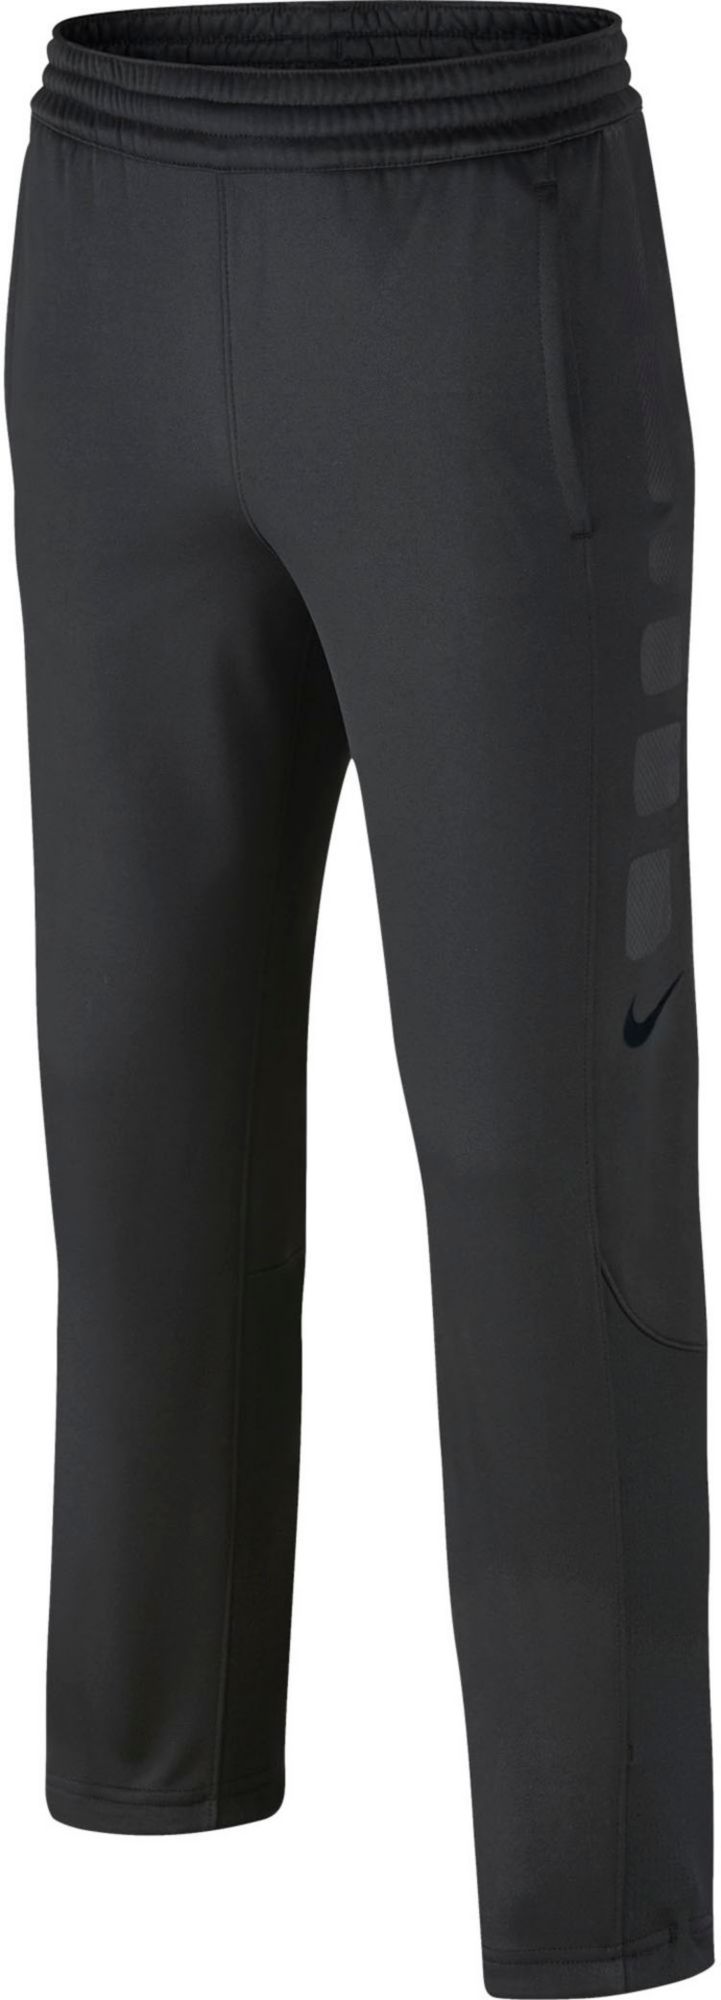 Nike Boys' Therma Elite Basketball Pants | DICK'S Sporting Goods